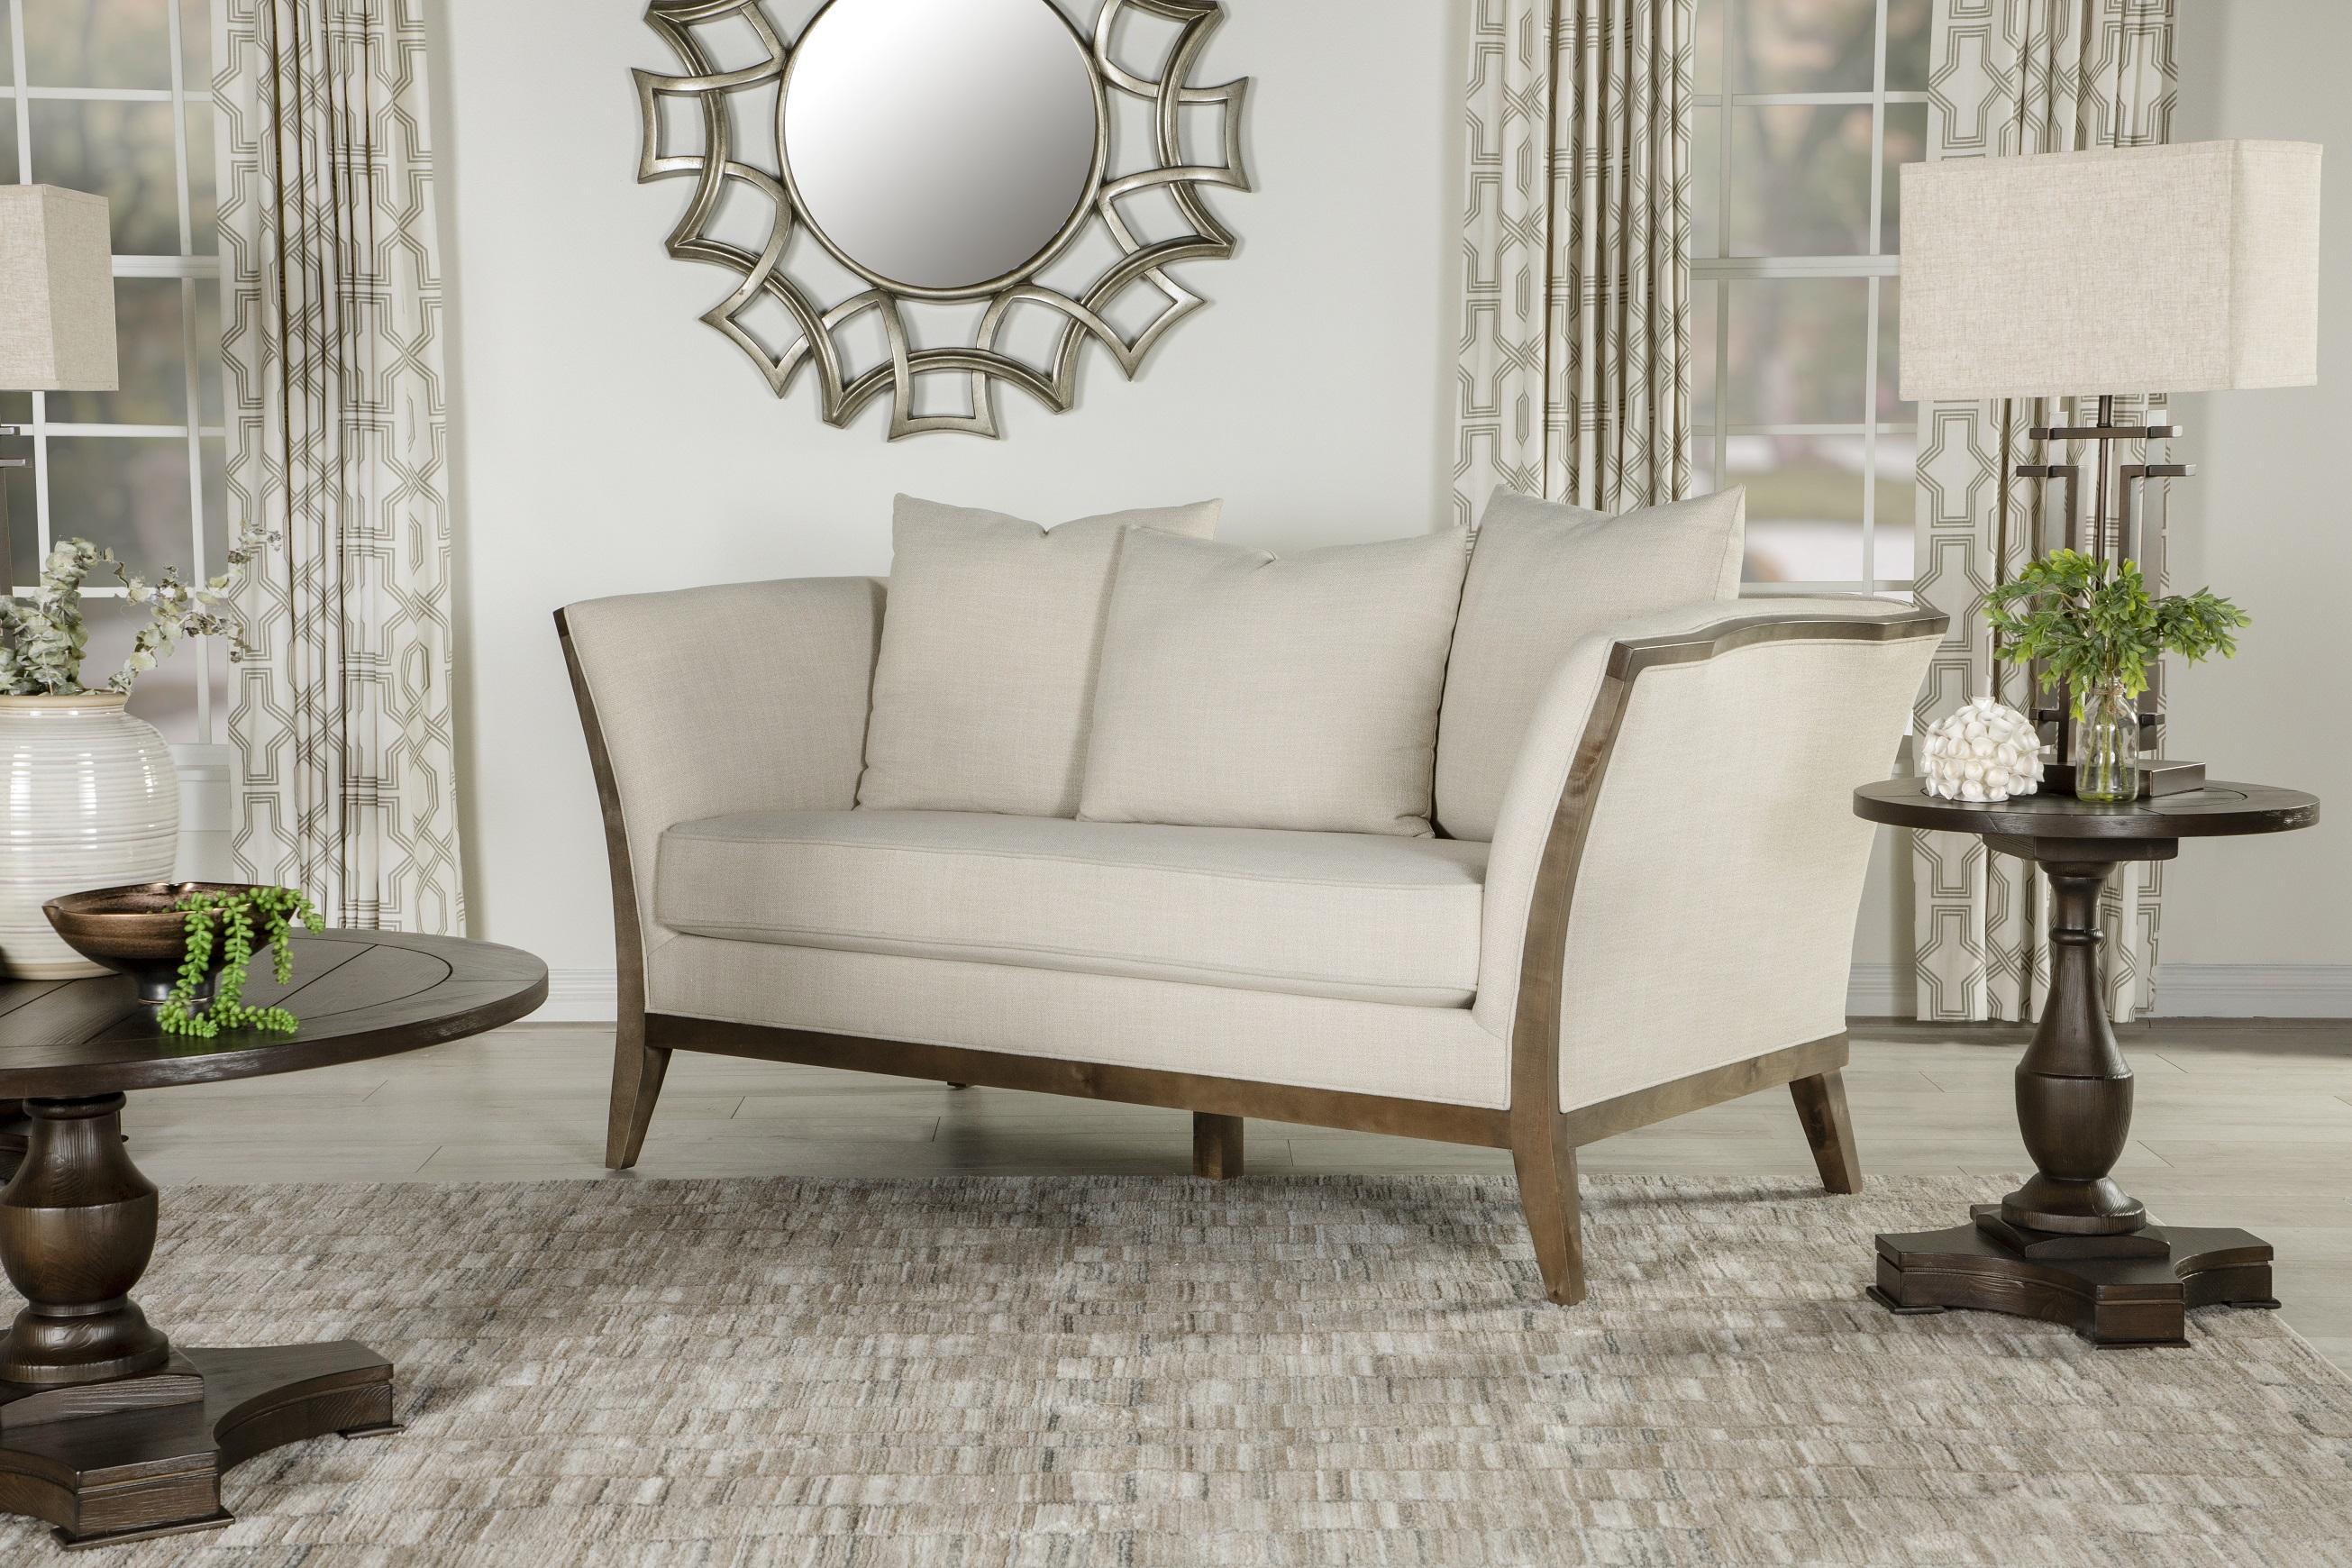 

                    
Coaster 511191-S3 Lorraine Living Room Set Beige Linen-like Fabric Purchase 
